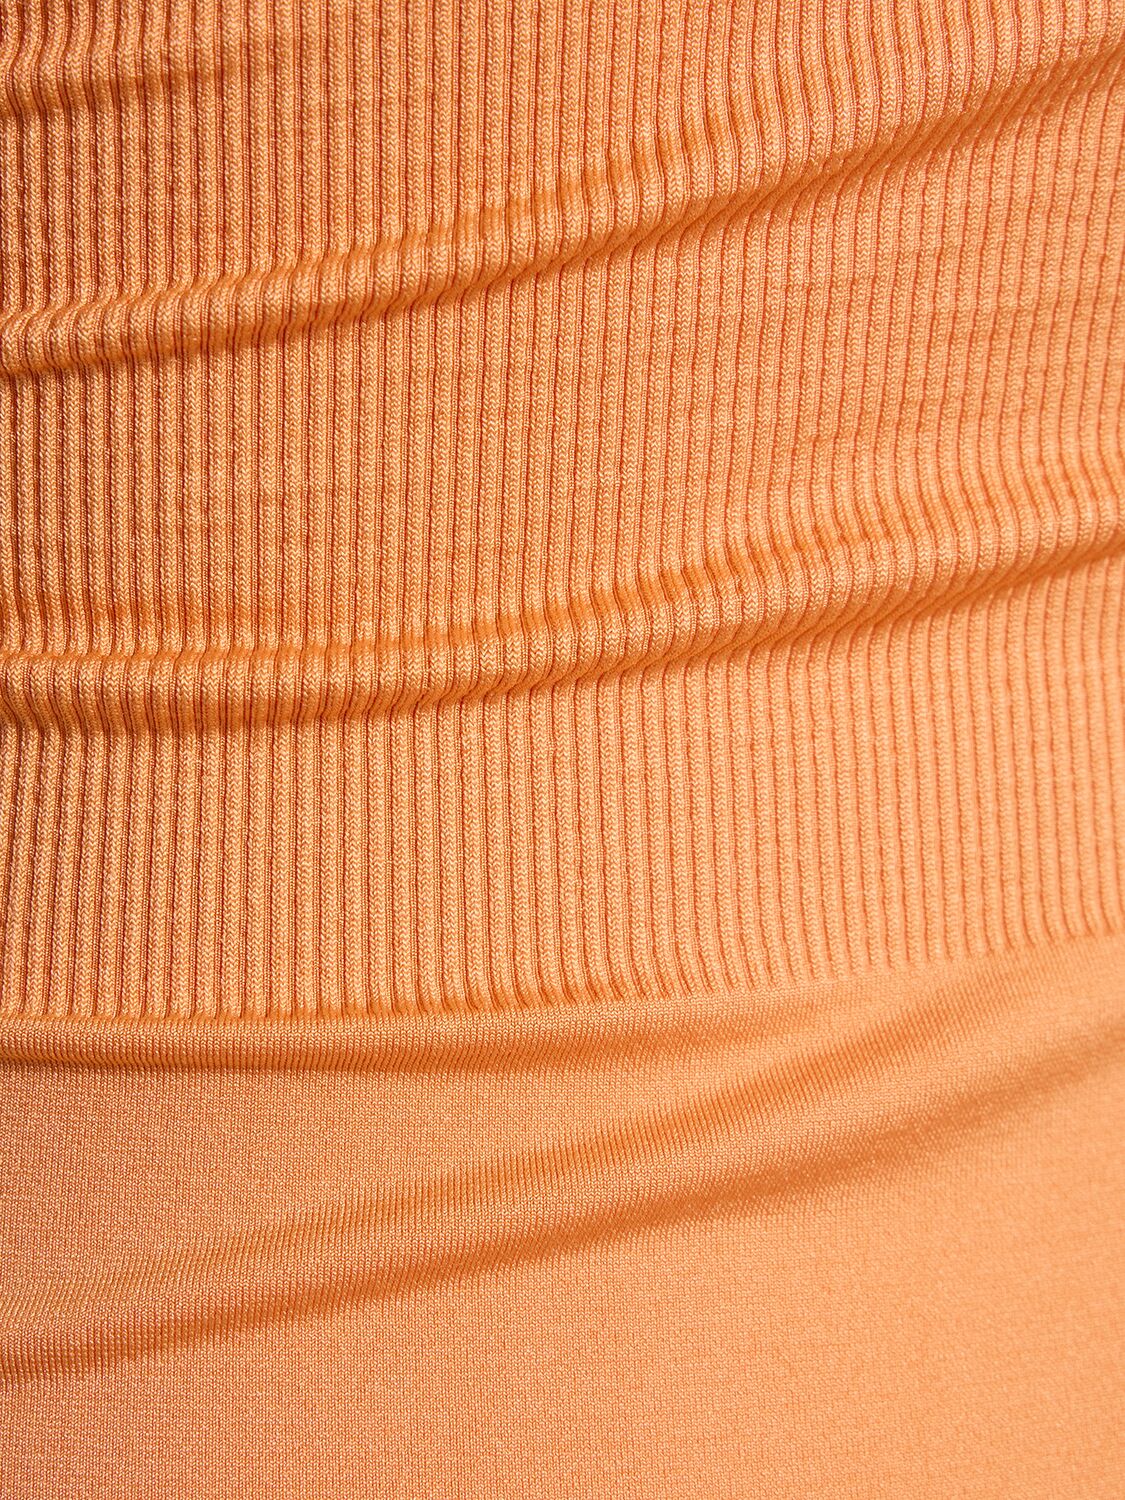 Shop Prism Squared Amorous Bodysuit In Orange